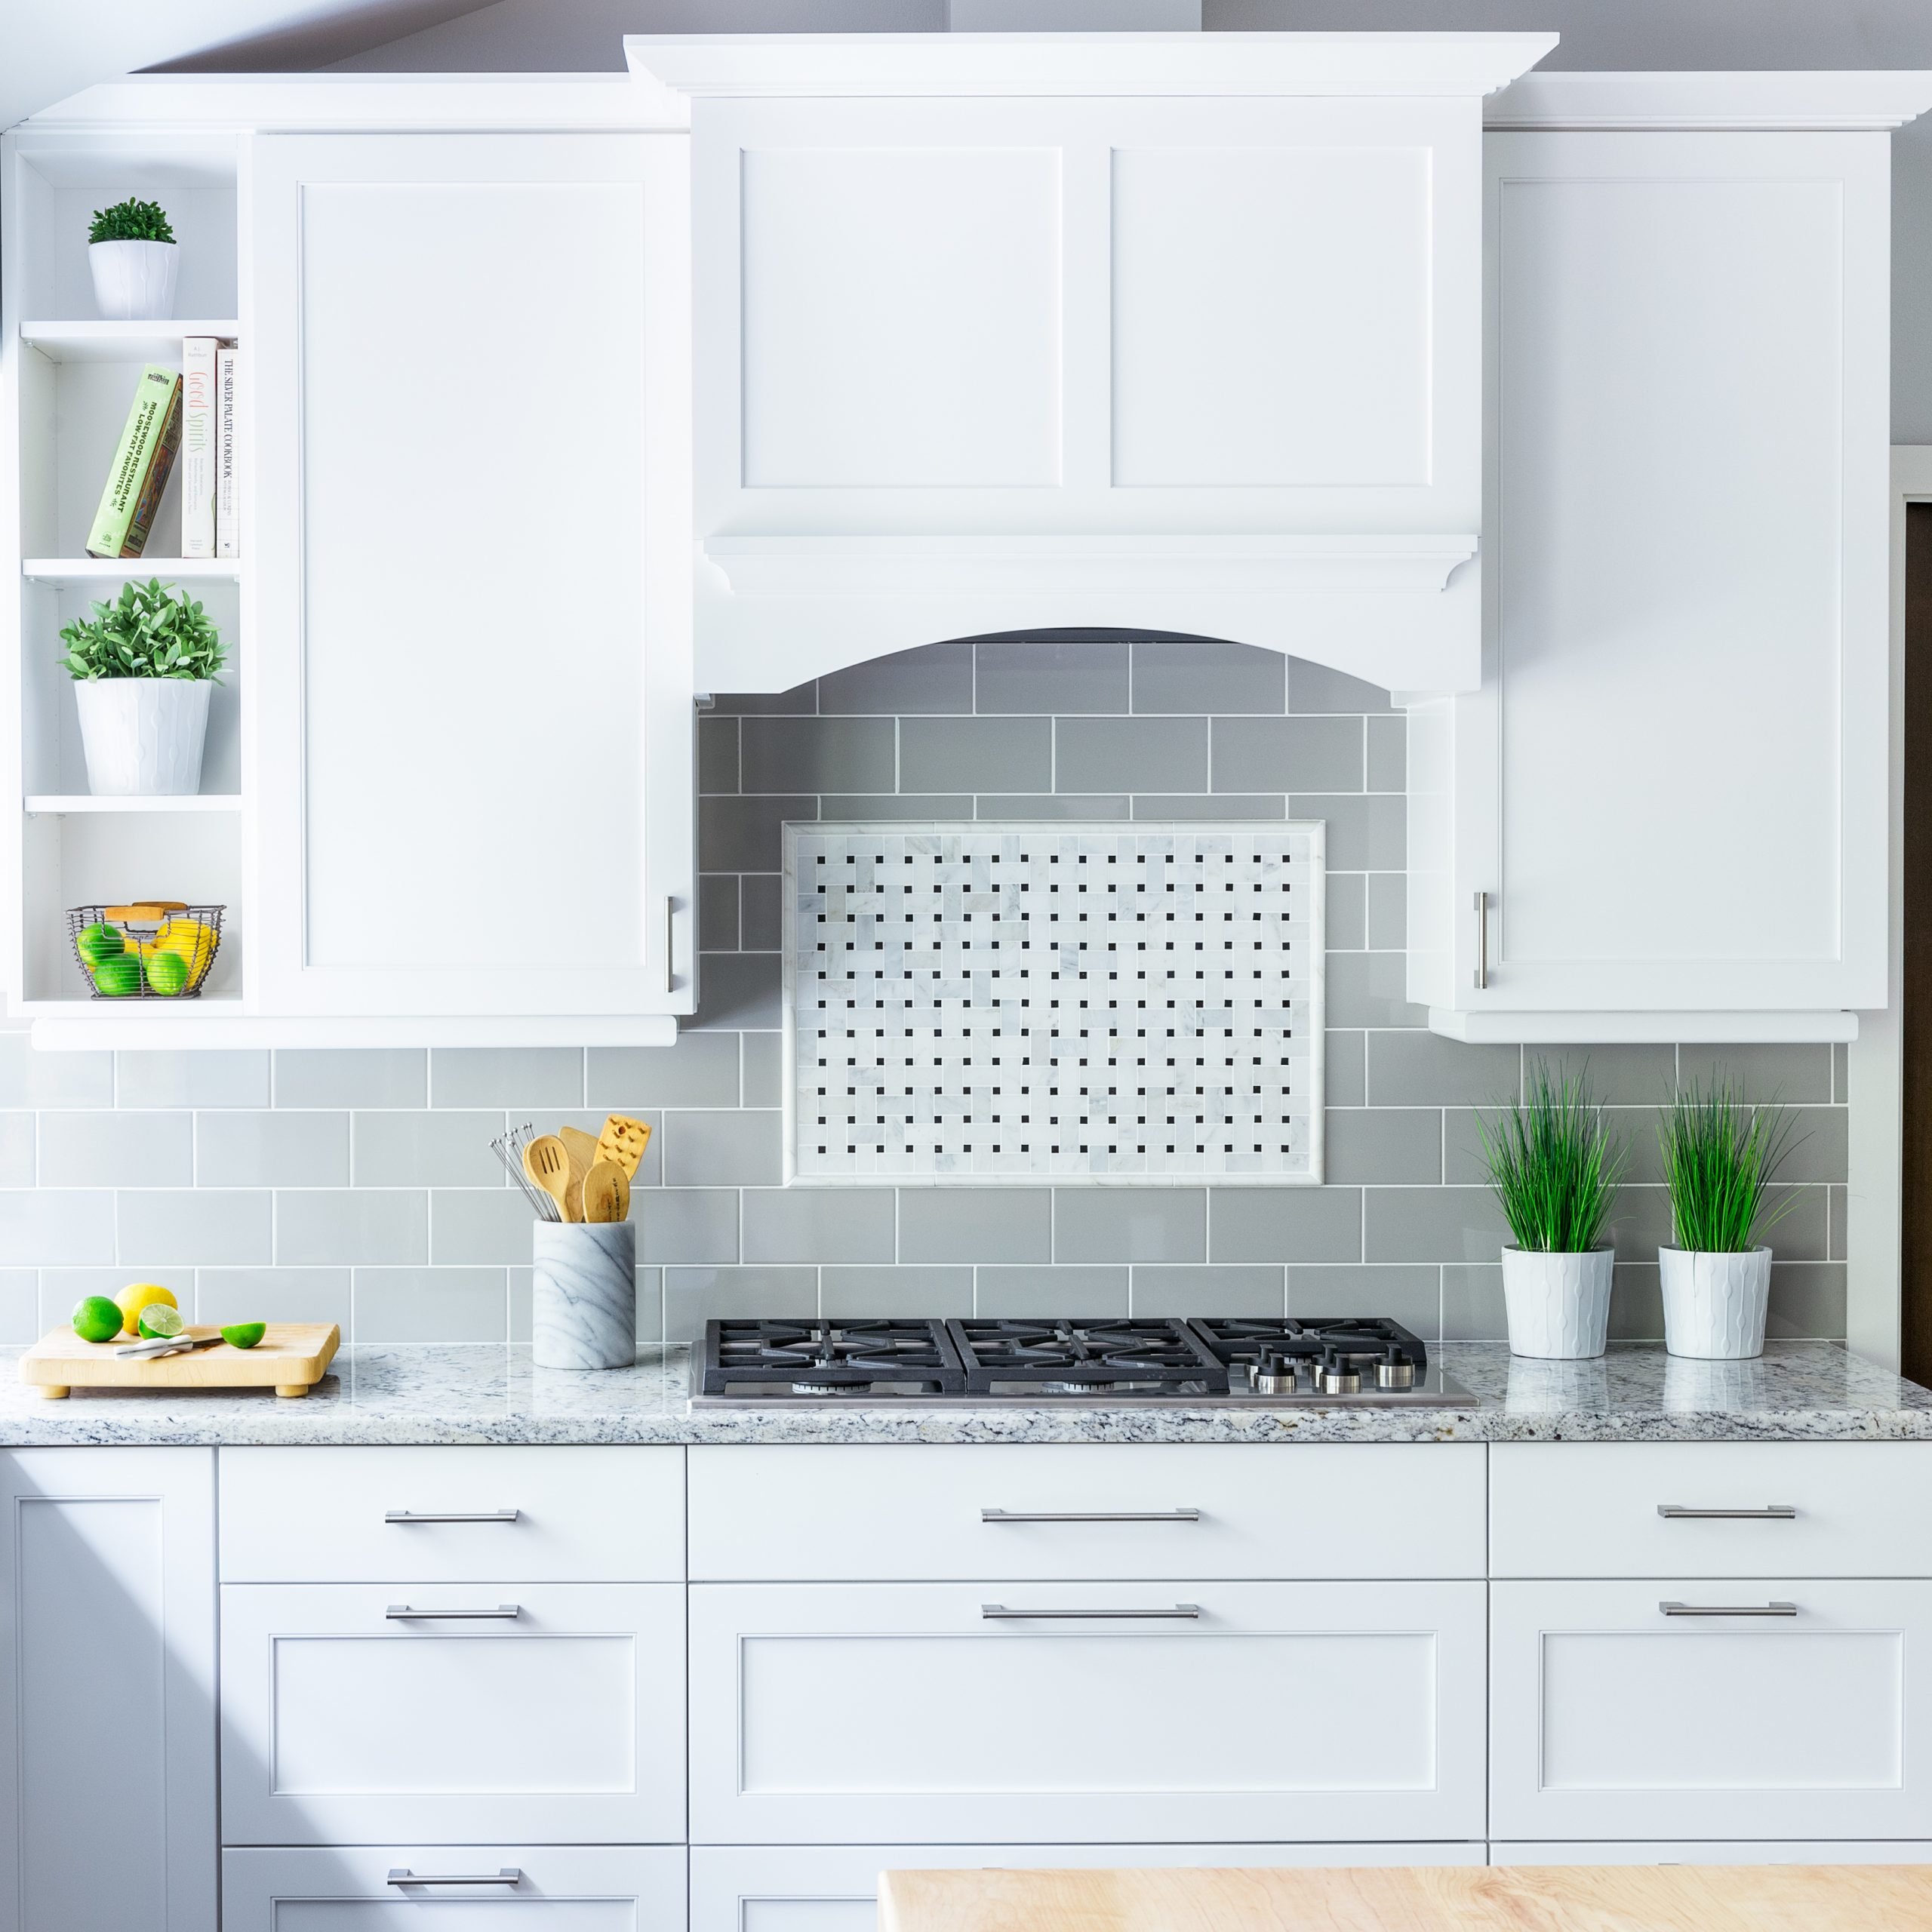 18 Gorgeous Kitchen Backsplash Ideas to Liven up Your Home